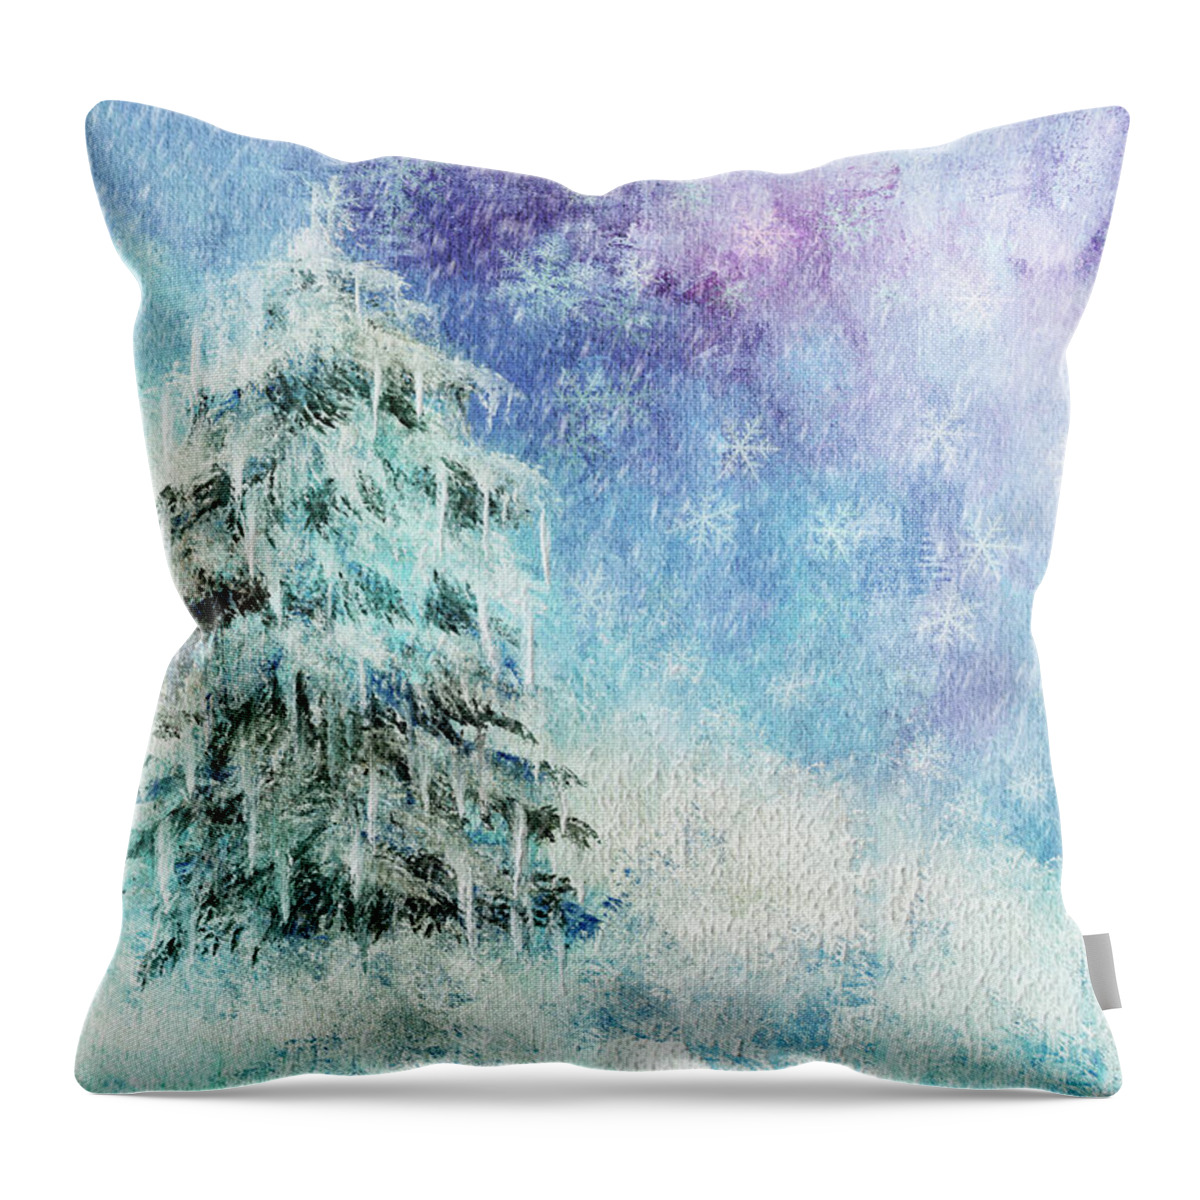 Snow Throw Pillow featuring the digital art Mountain Magic by Lois Bryan